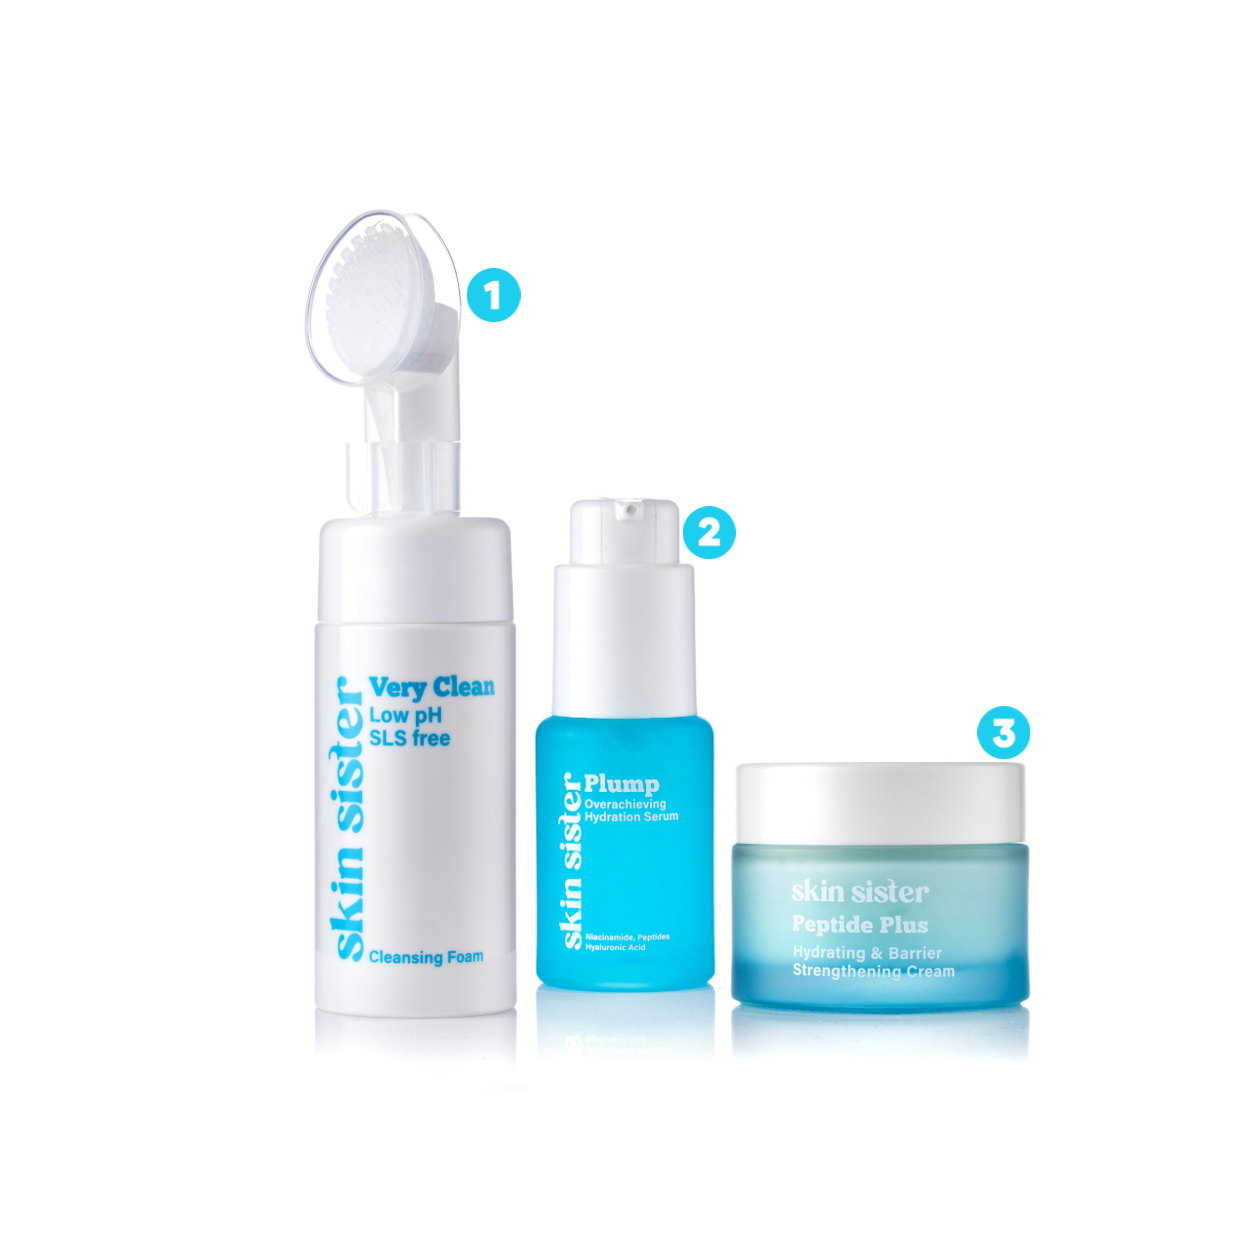 three step skincare system step 1 cleanse step 2 serum to clear skin. step 3 moisturiser